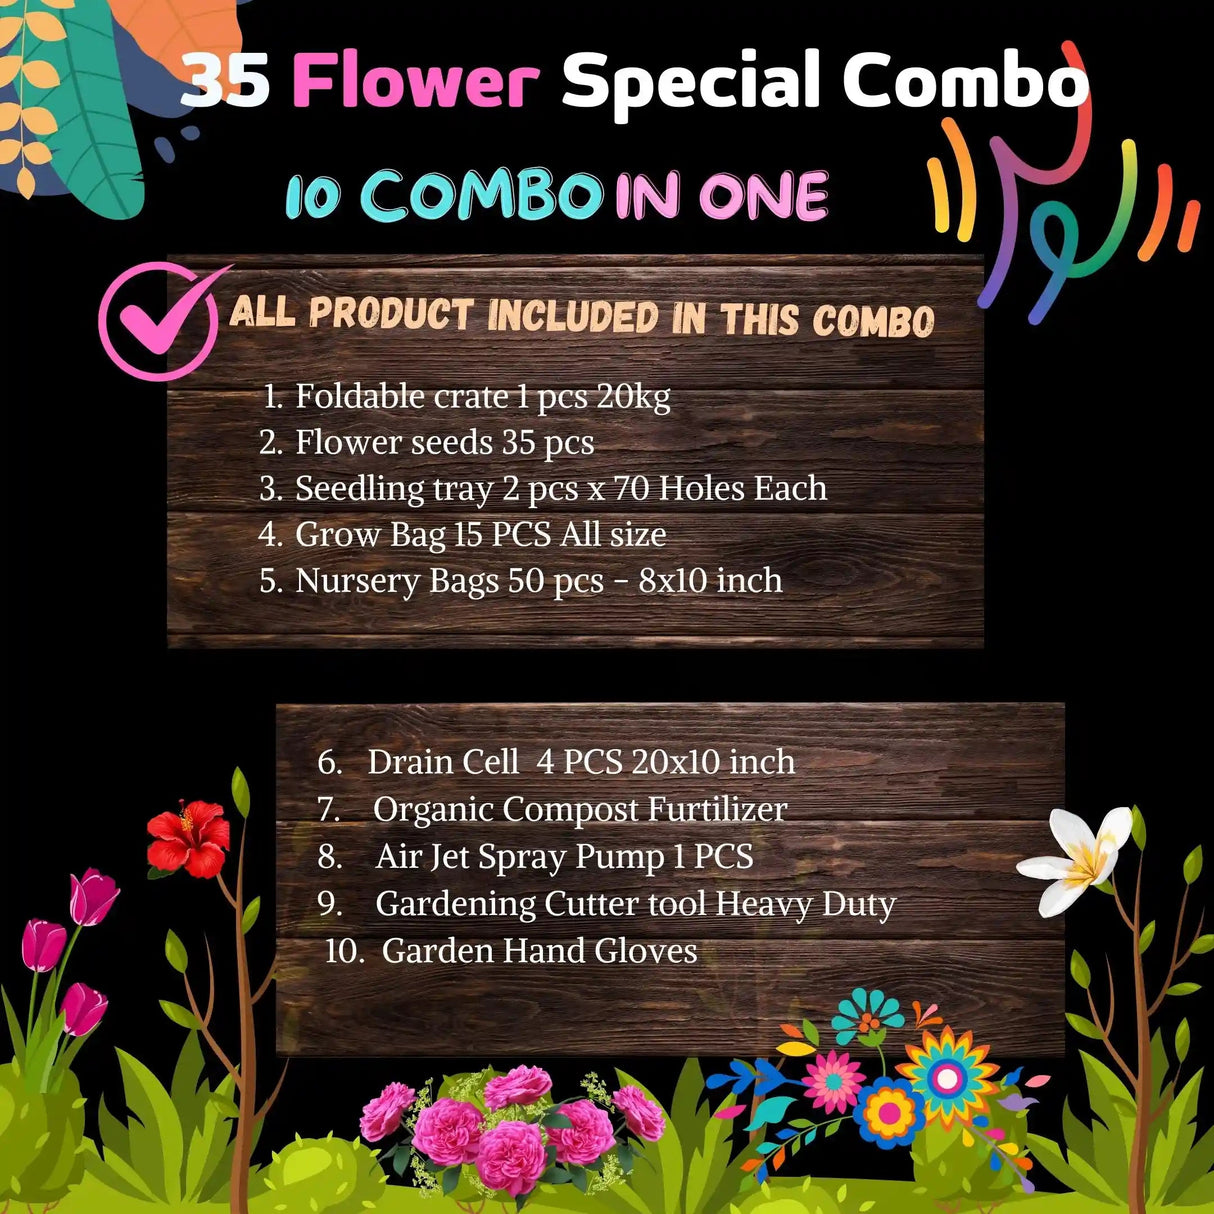 35 Flower Special Kit,  10 Combo Grow Kit for your Garden - Singhal Mart